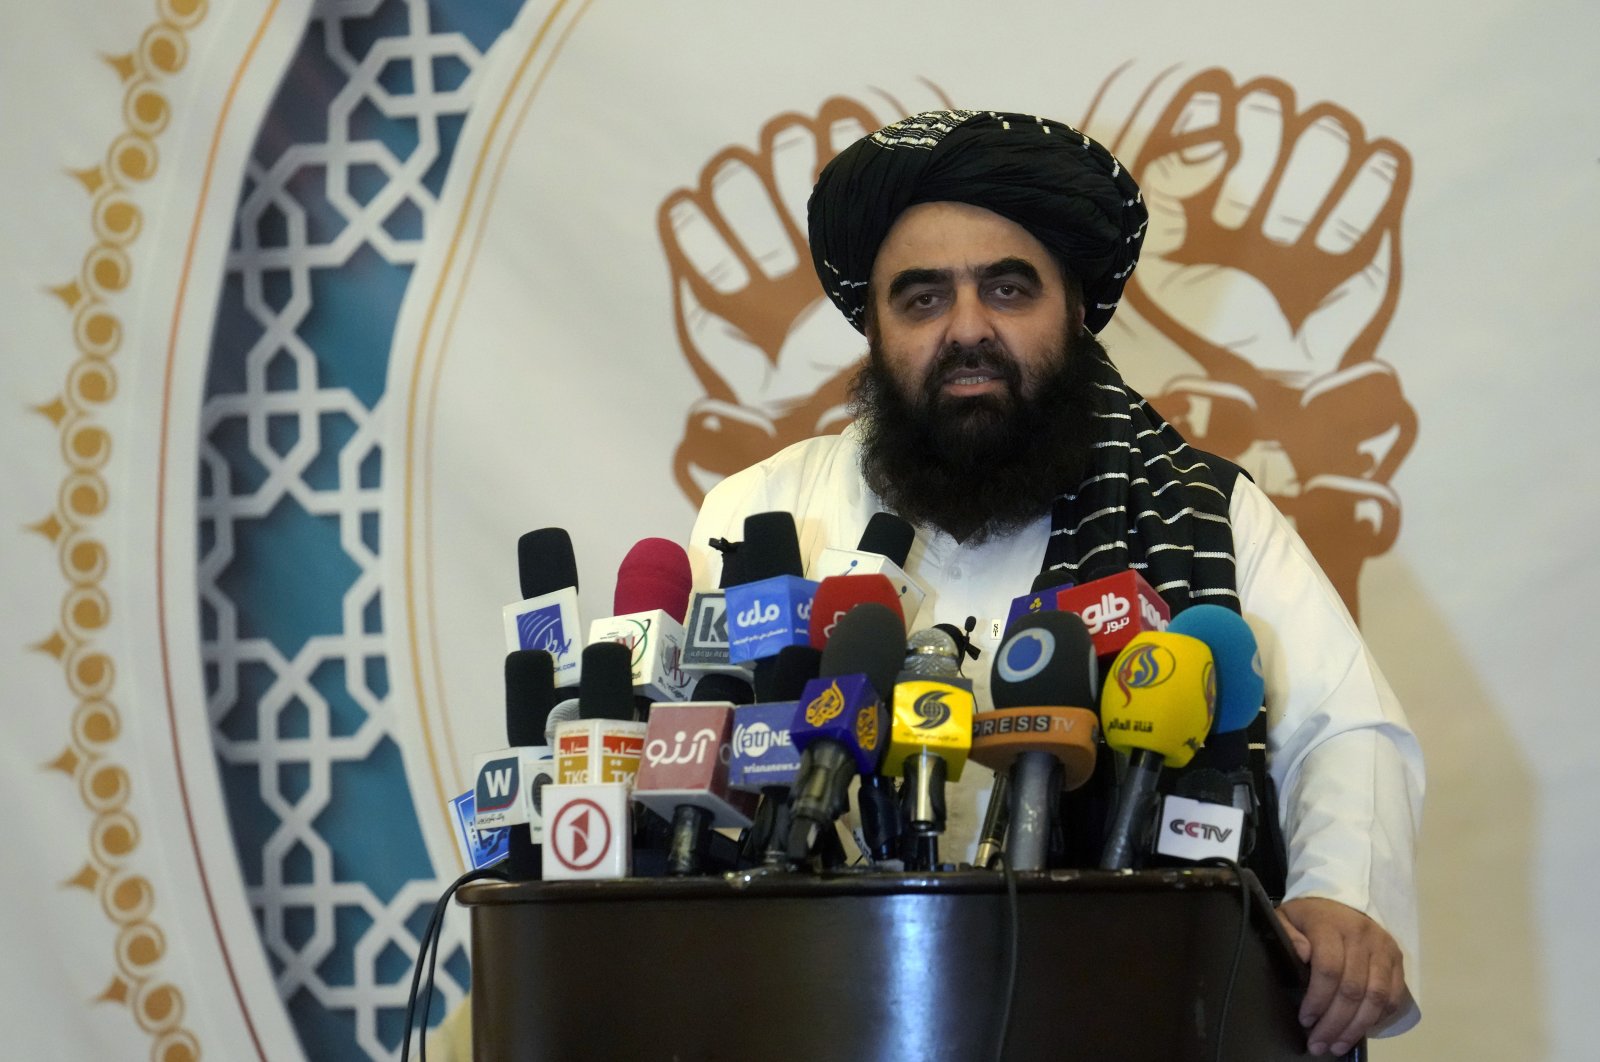 Taliban mengkonfirmasi pembebasan warga AS dalam pertukaran tahanan